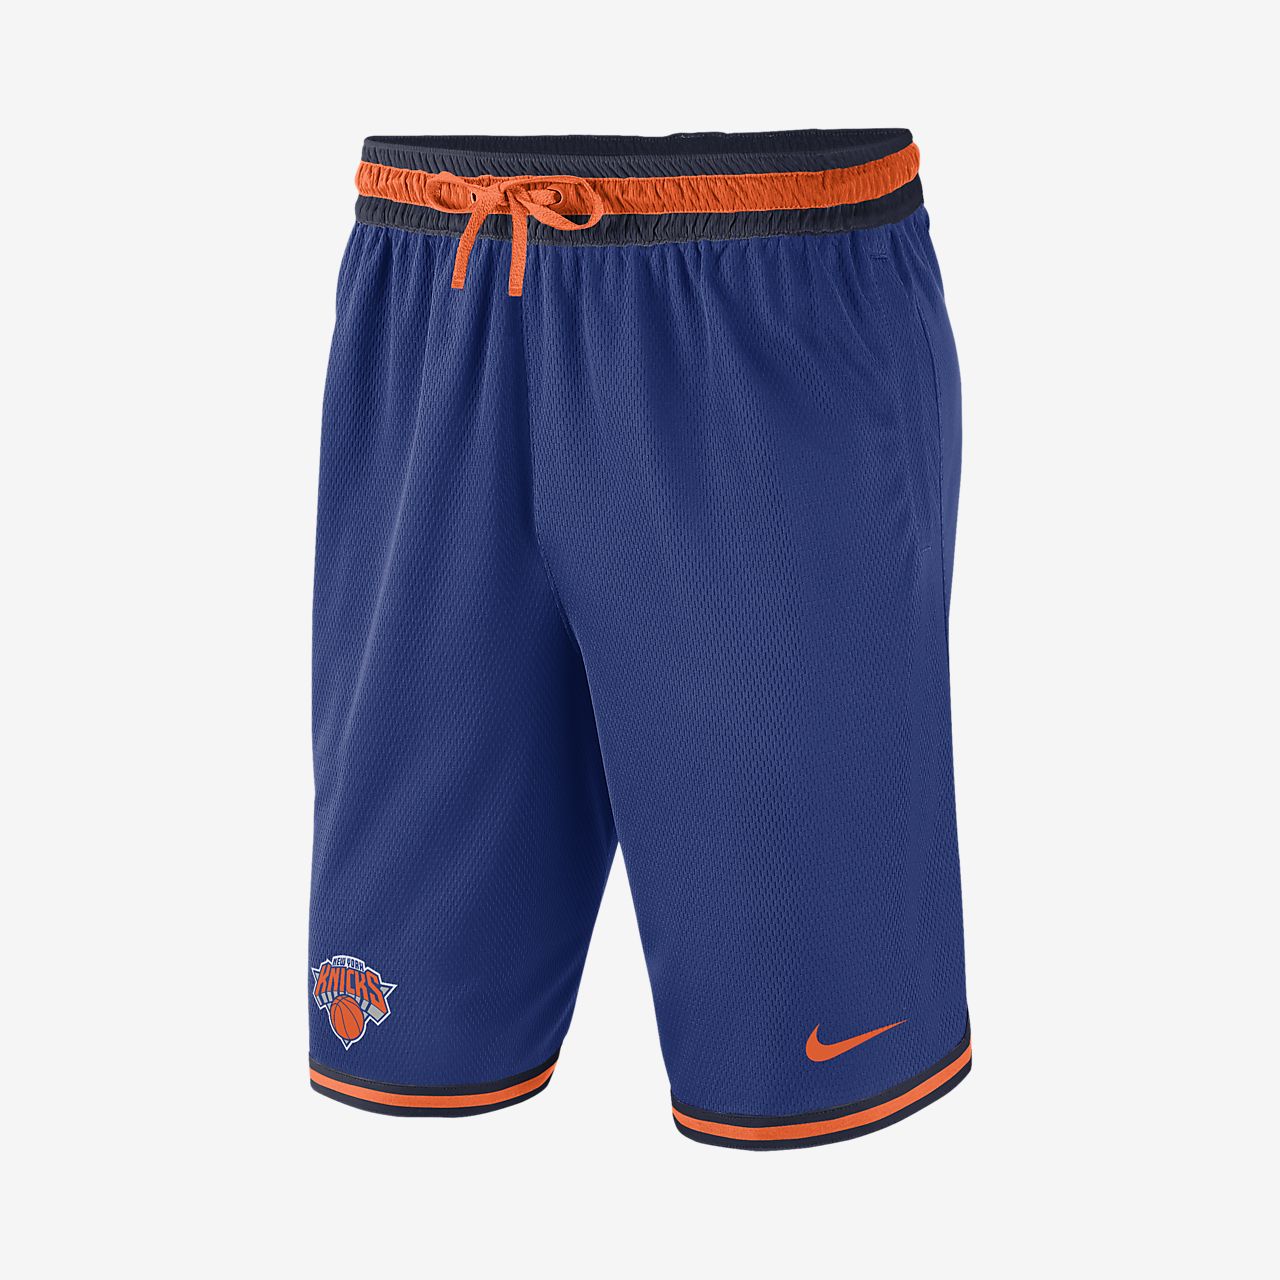 new york knicks orange shorts